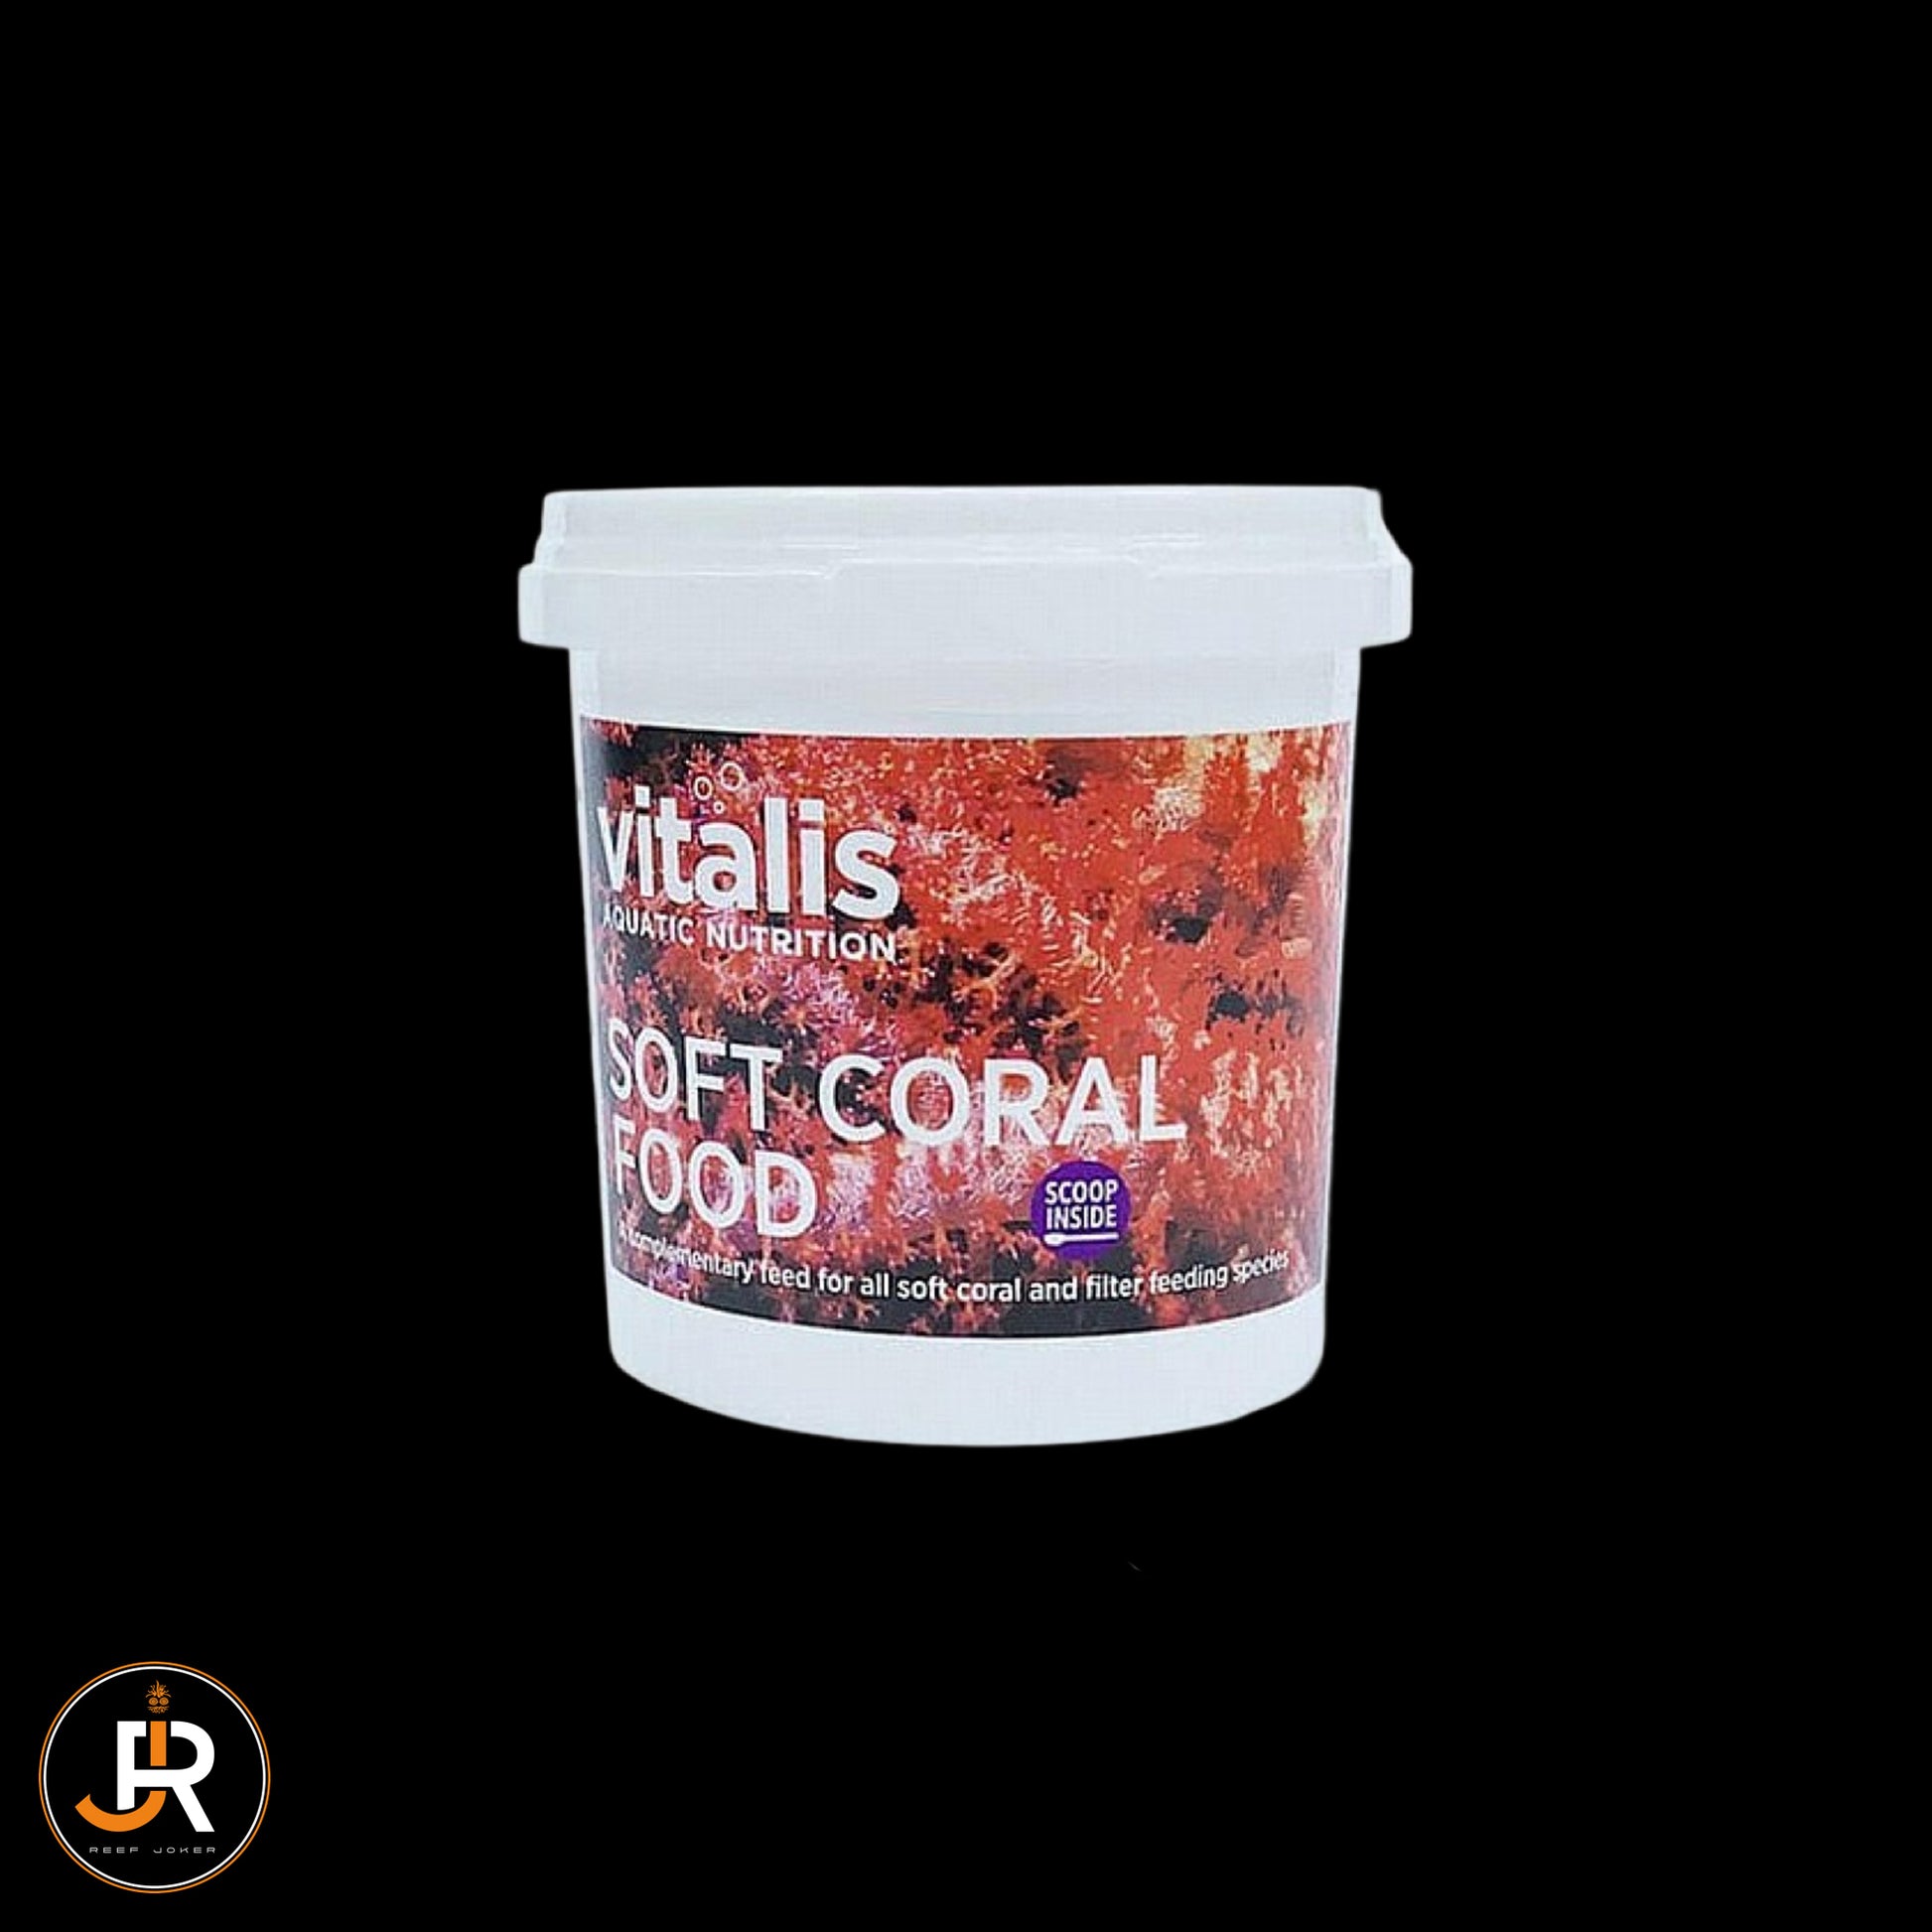 Vitalis - Soft Coral Food 